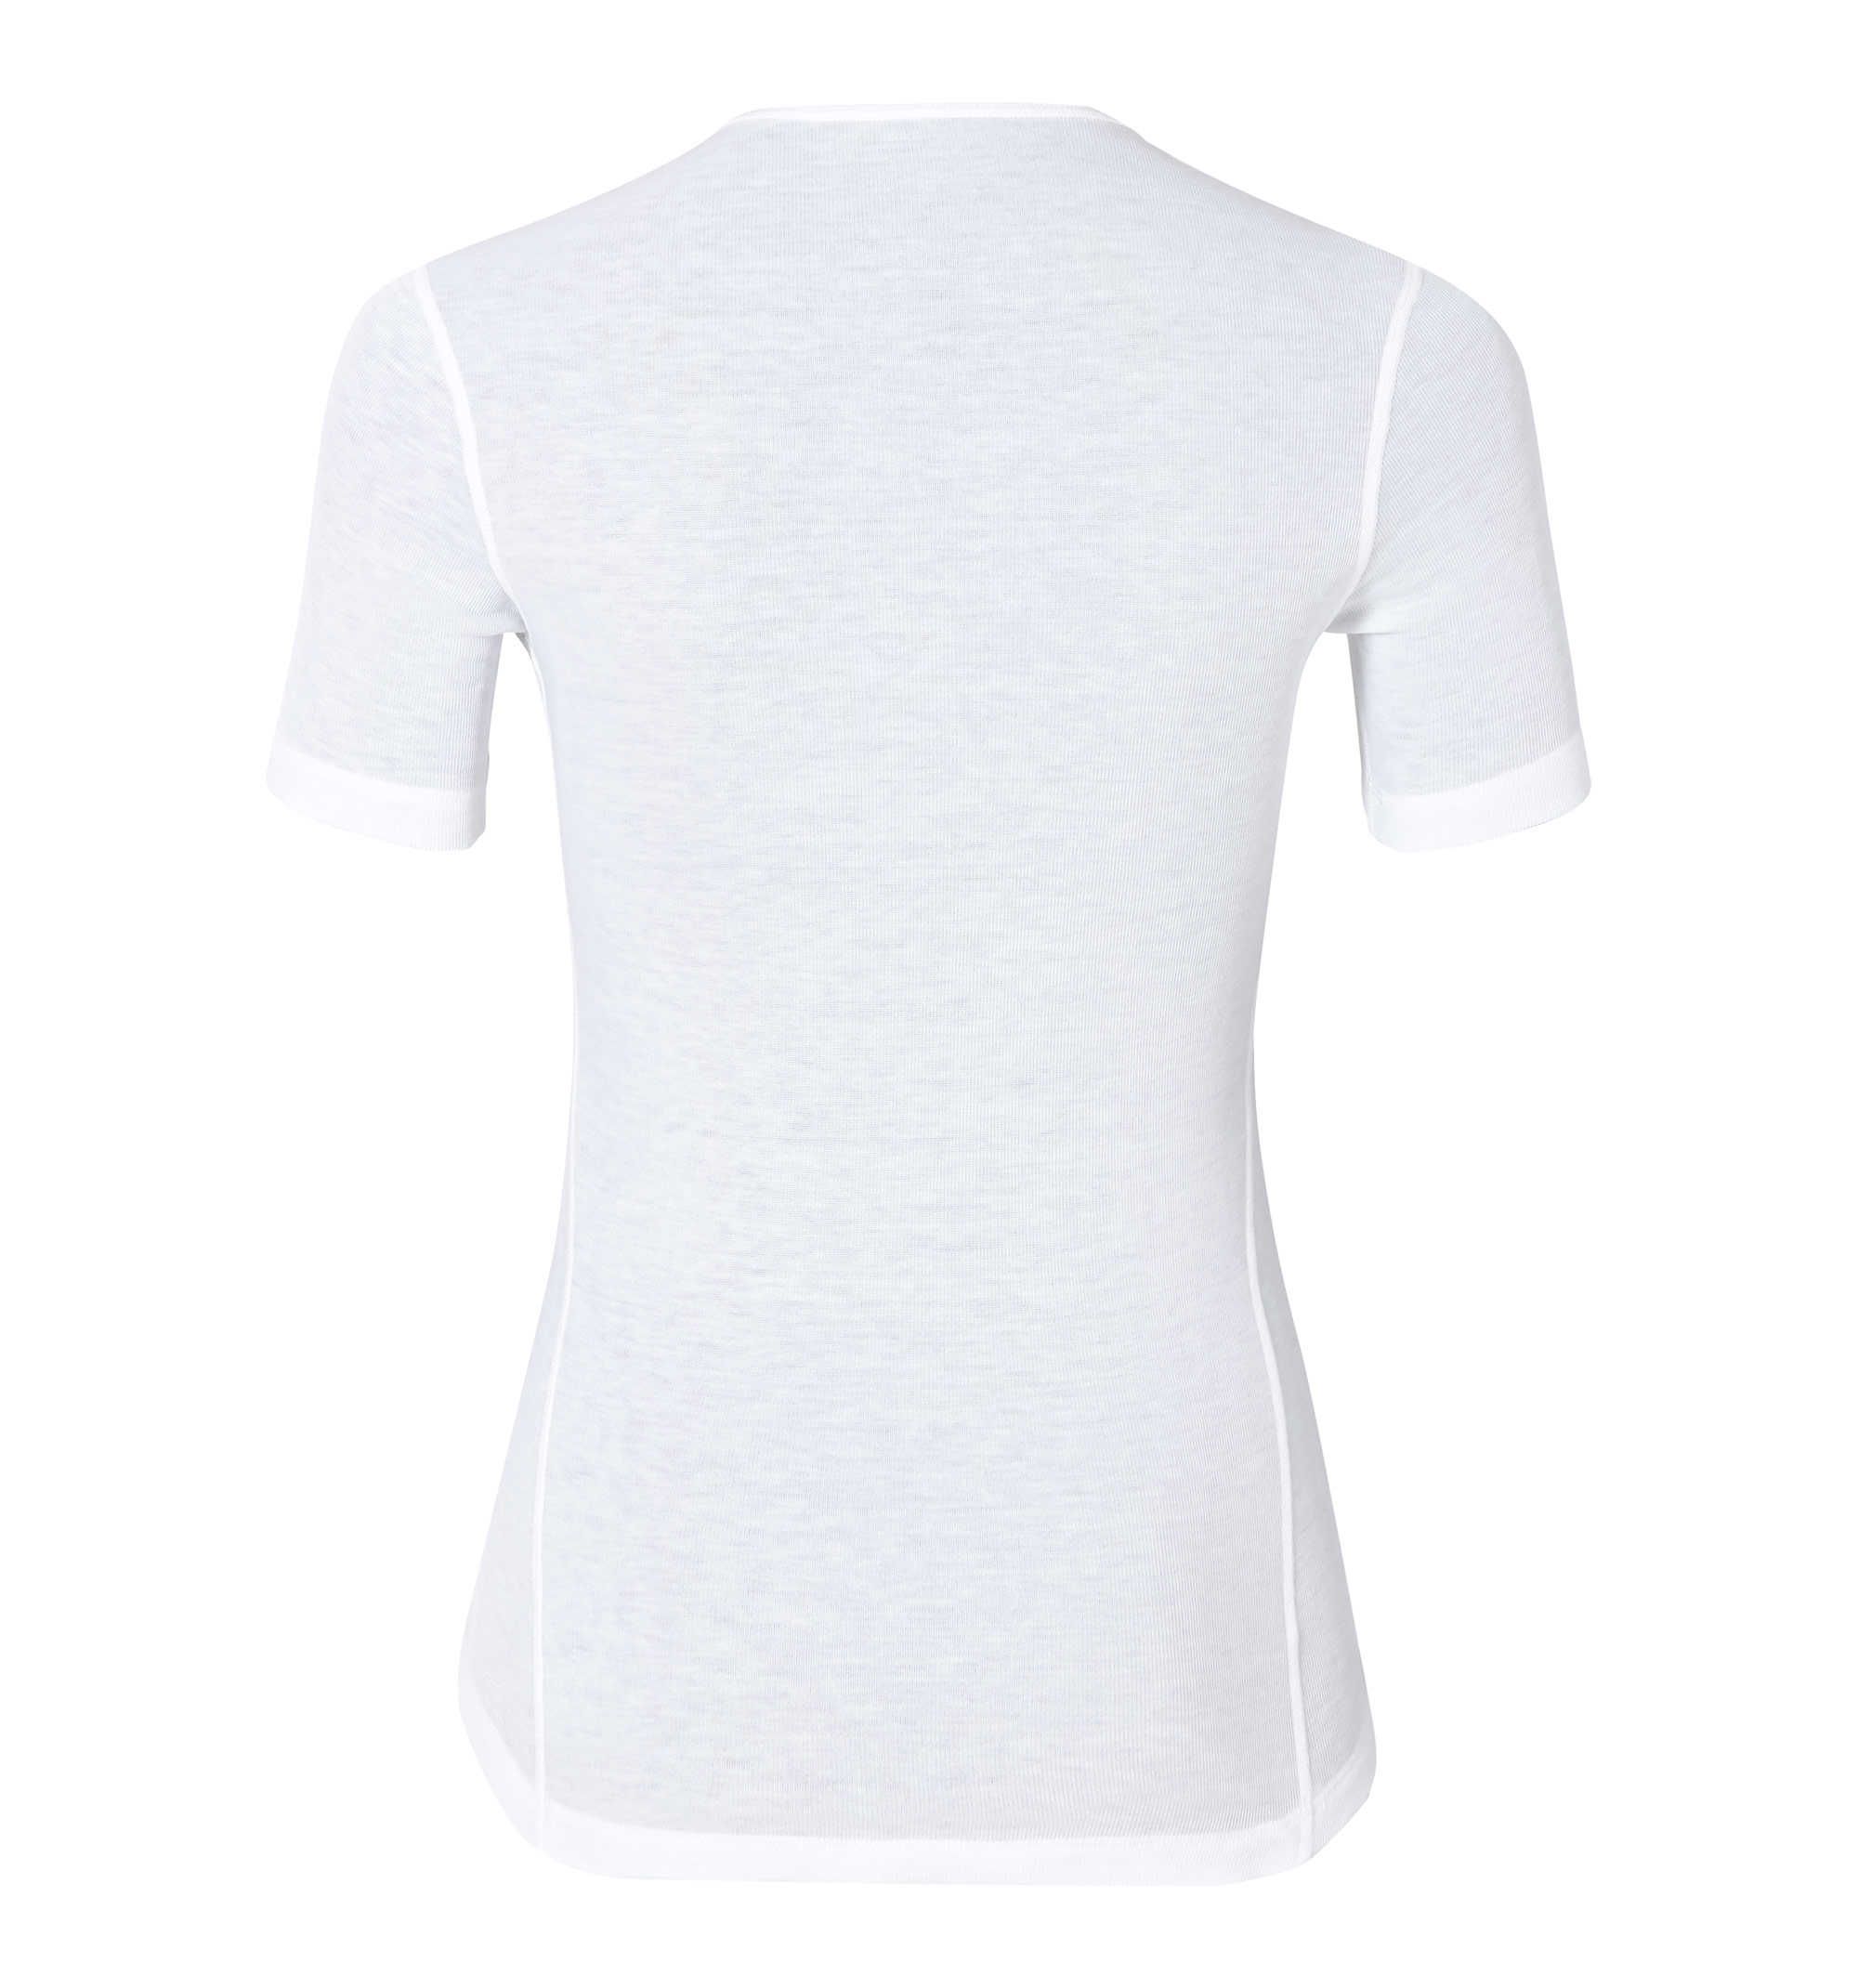 T shirt Femme MC Warm - Blanc